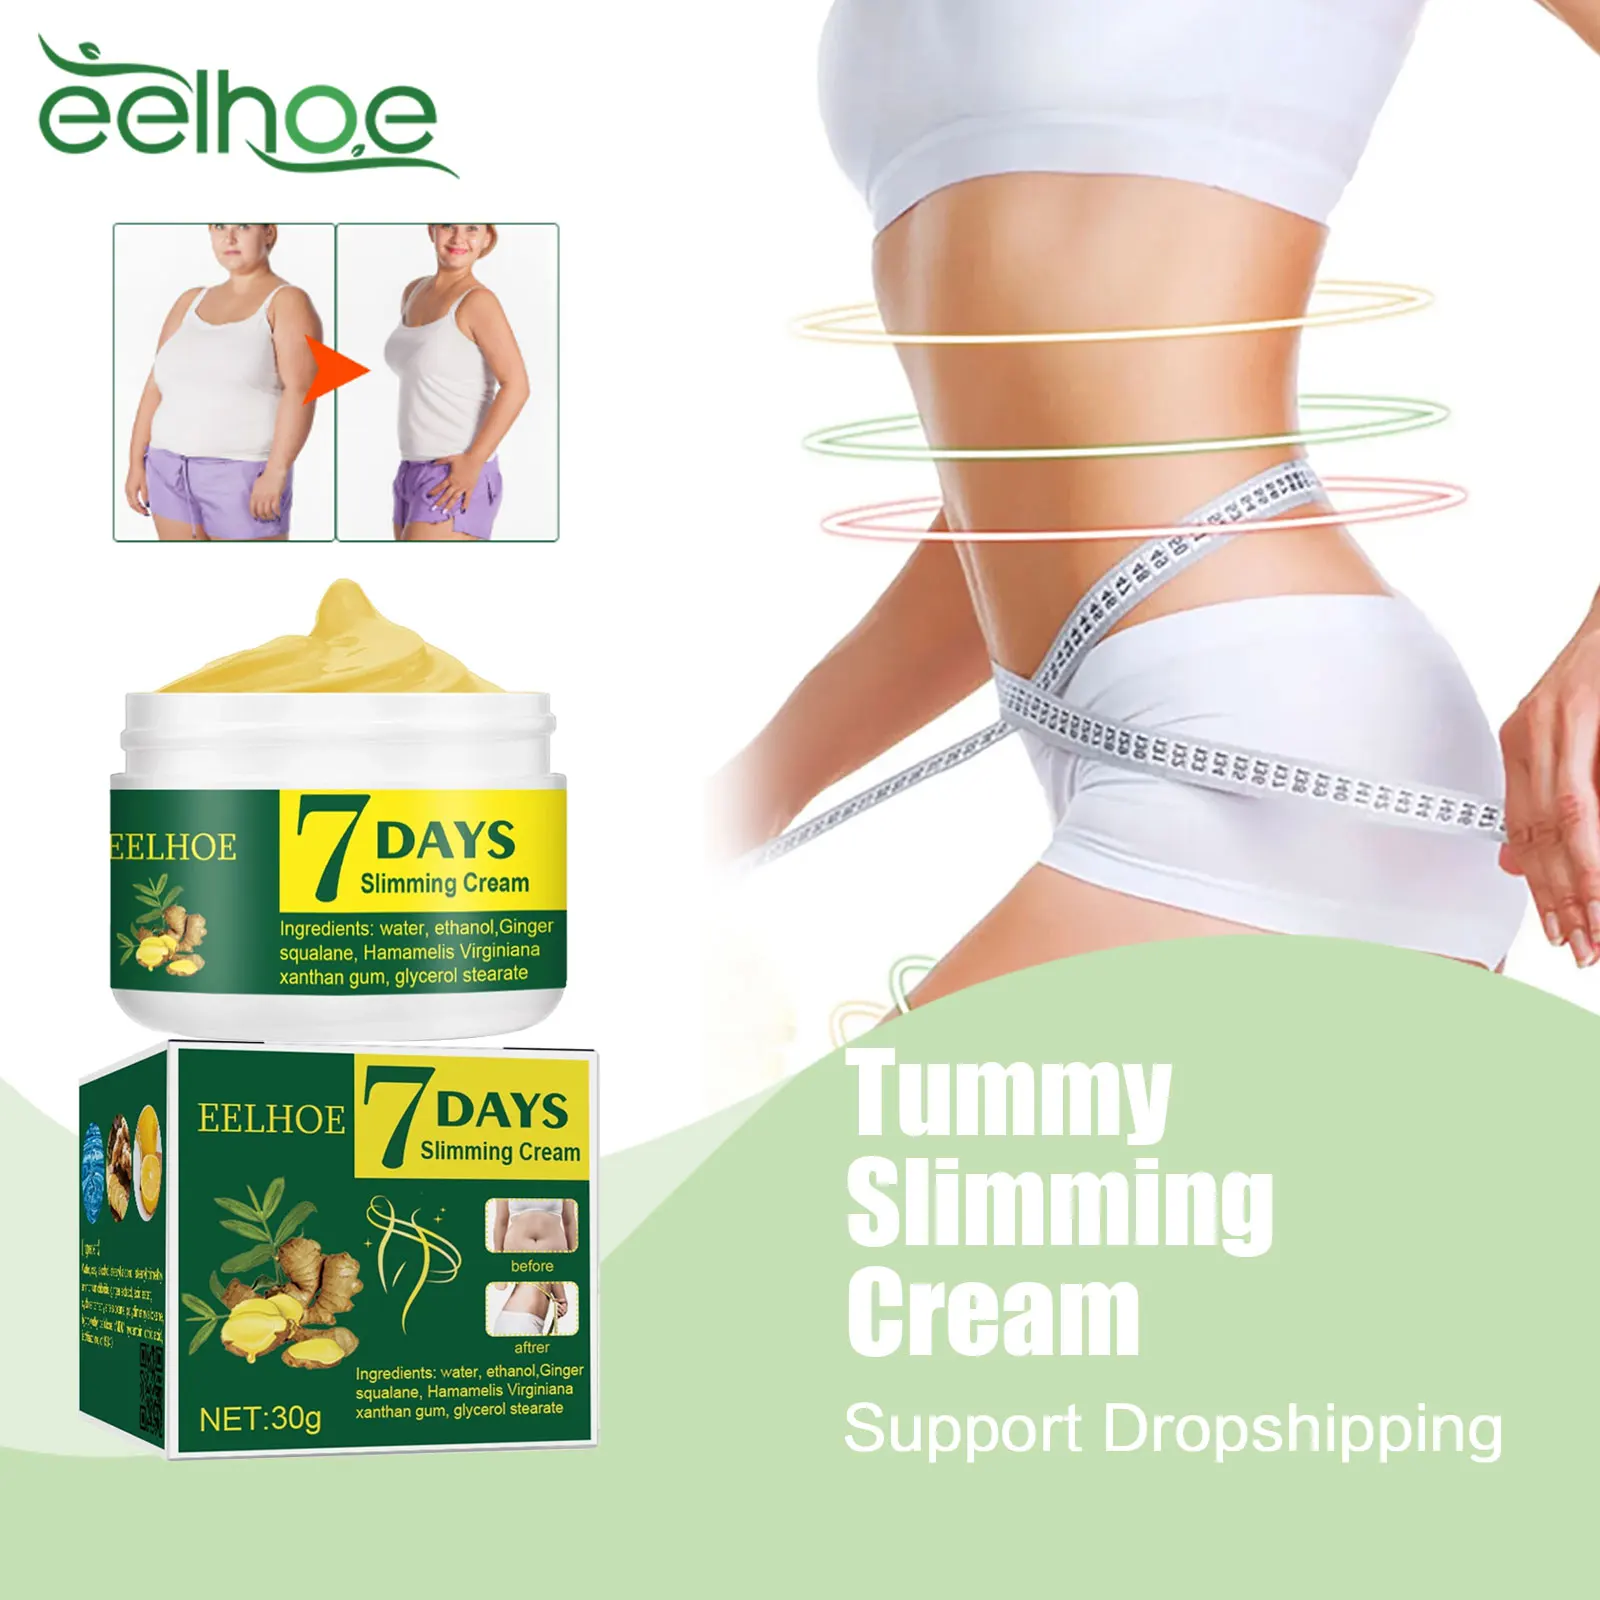 

Tummy Slimming Cream Improve Metabolism Belly Waist Arm Cellulite Removal Abdomen Legs Fat Burning Body Firming Sculpting Cream